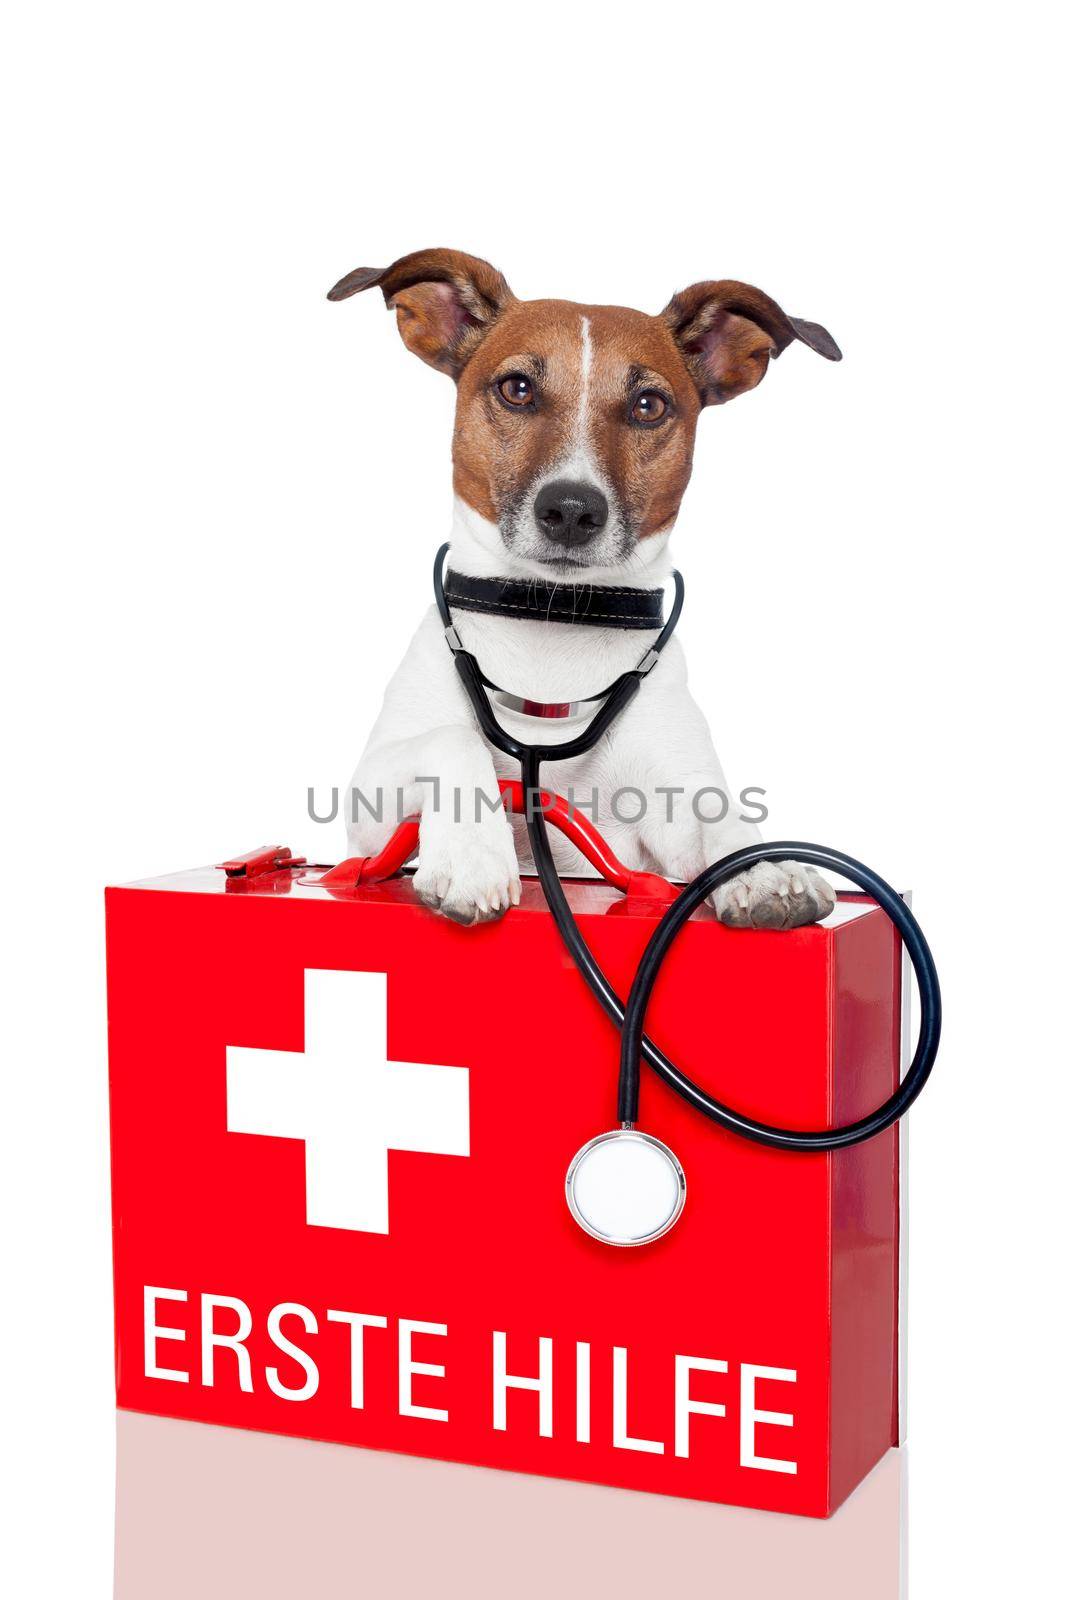 first aid dog by Brosch